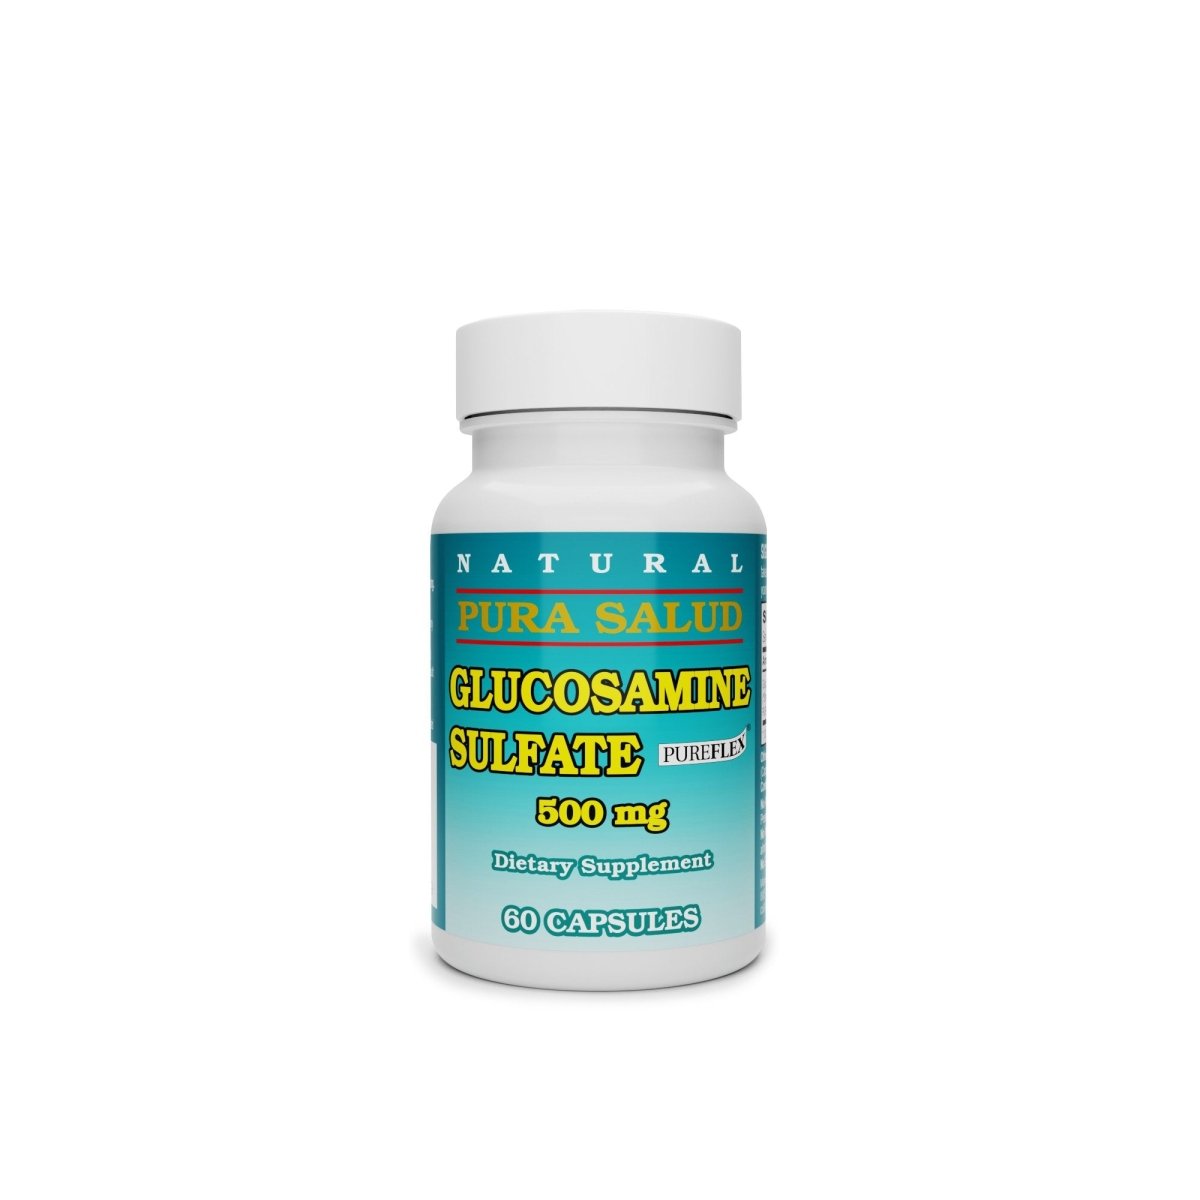 Pura Salud Glucosamine Hci Joint Health Supplement - 503391_BT - 1